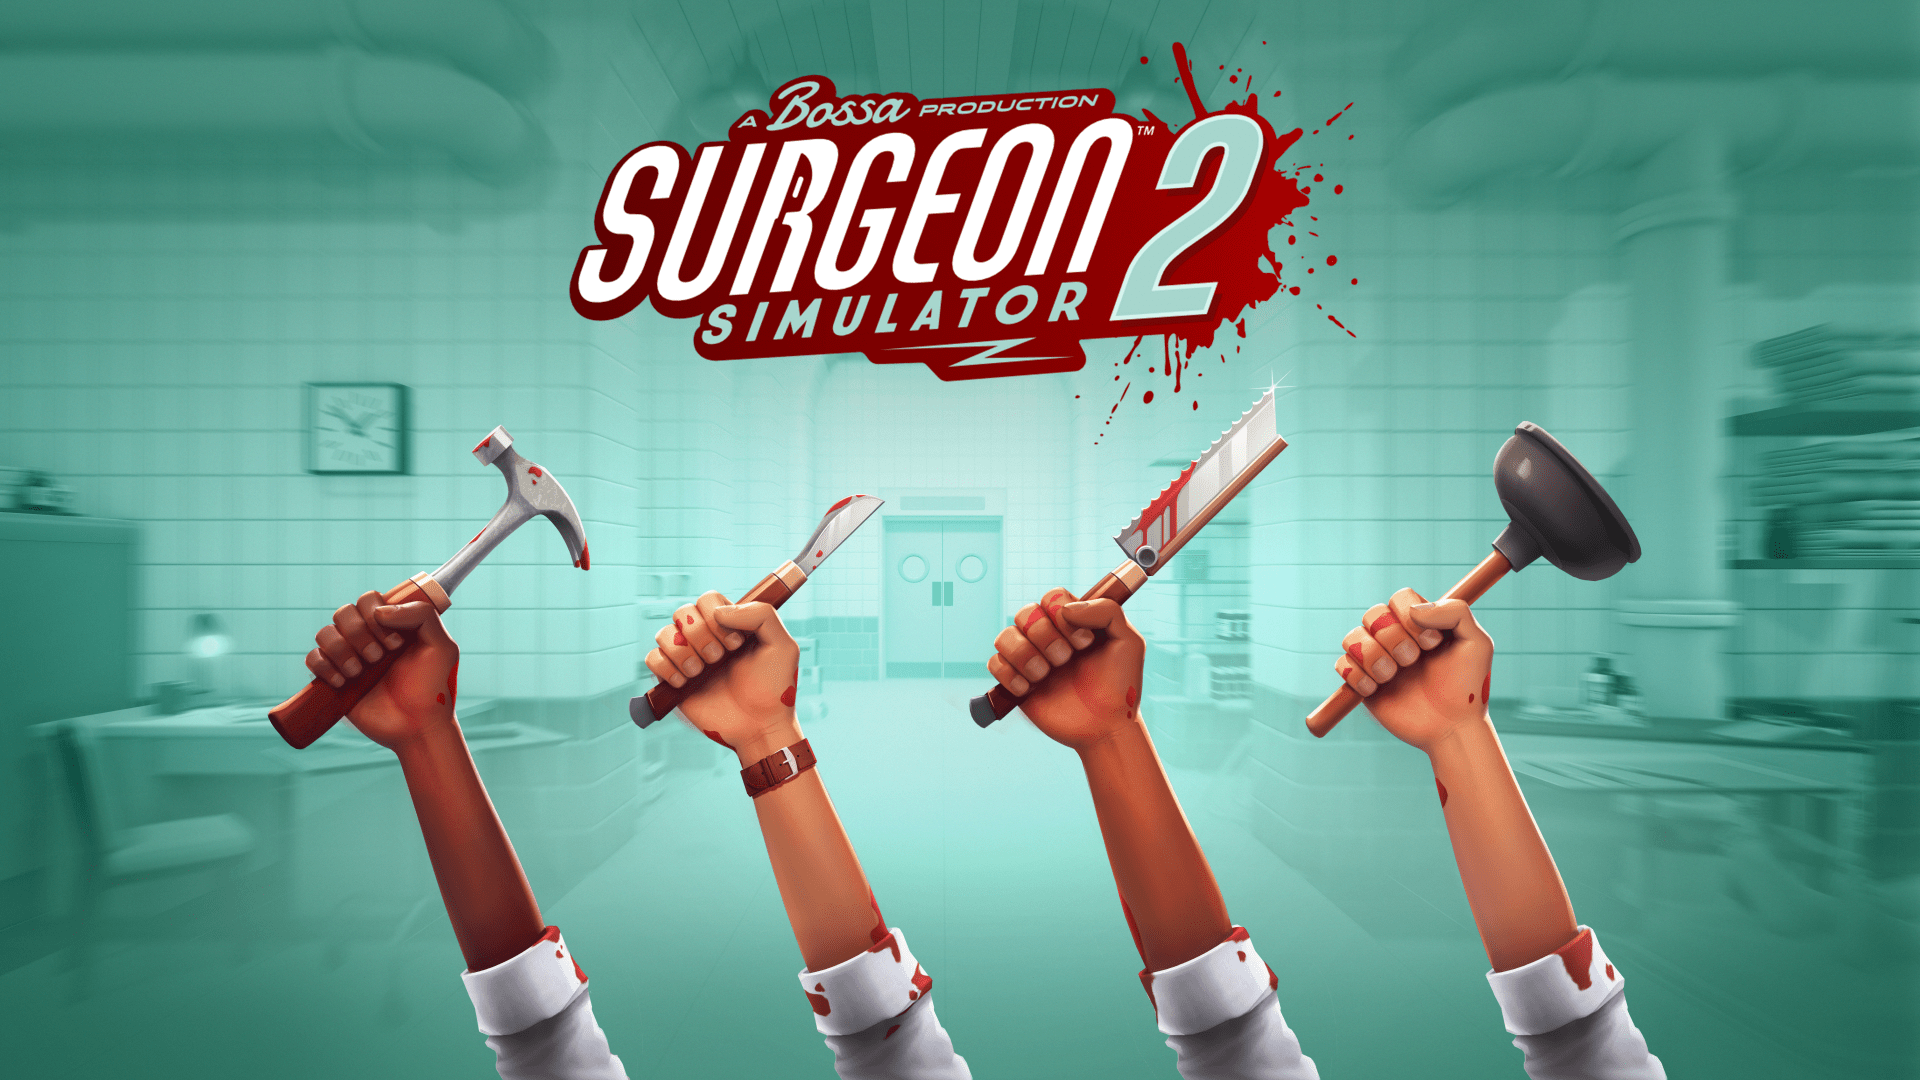 surgeon-simulator-2-team-will-pay-1-000-for-winning-level-creations-gayming-magazine